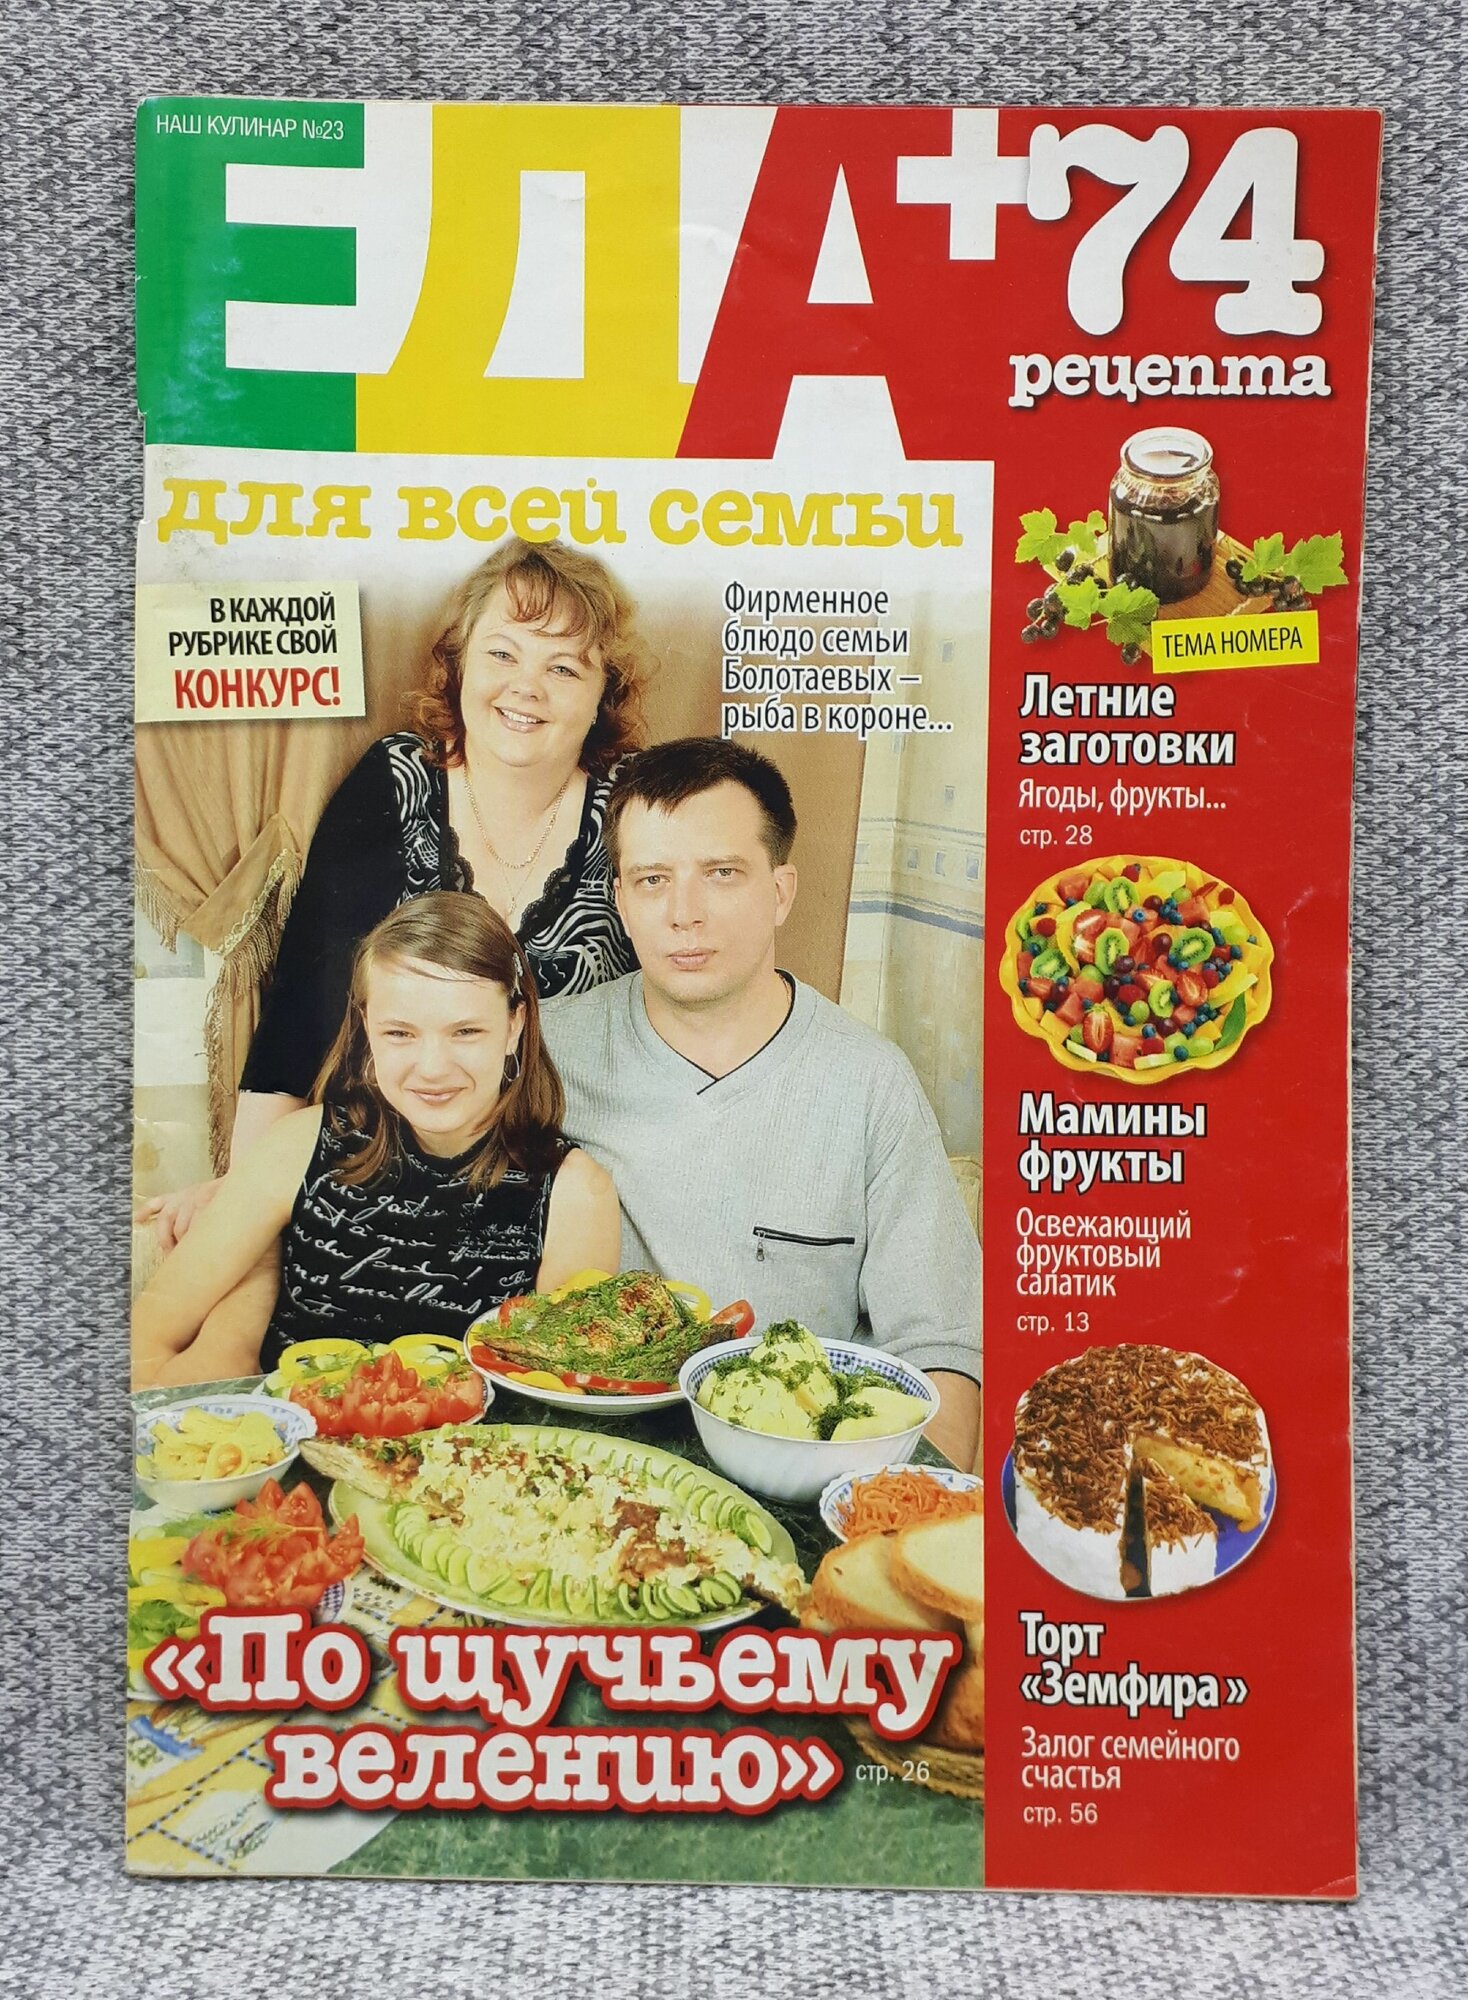 Газета "Наш кулинар" / Выпуск № 23 / 2007 год